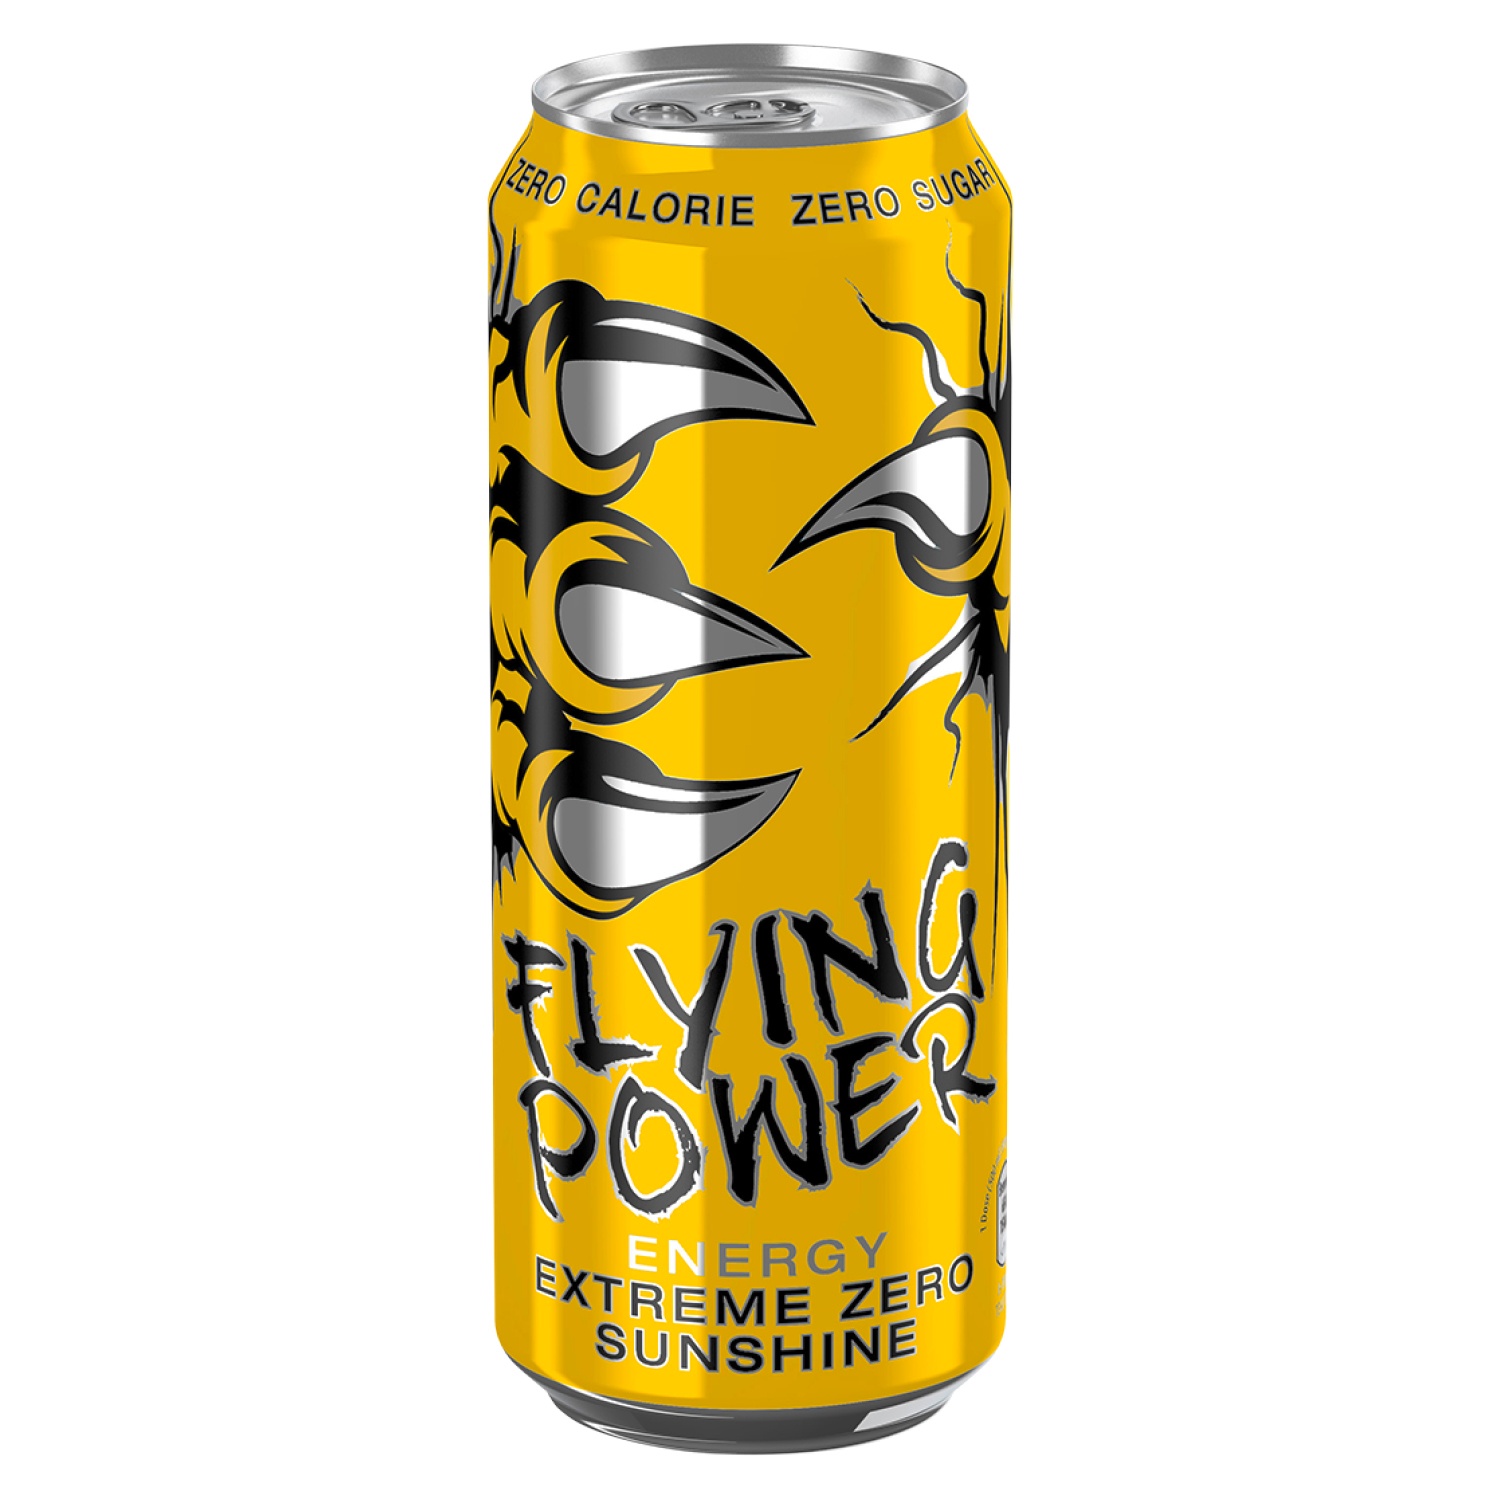 FLYING POWER Extreme Zero Energy Drink 0,5 l